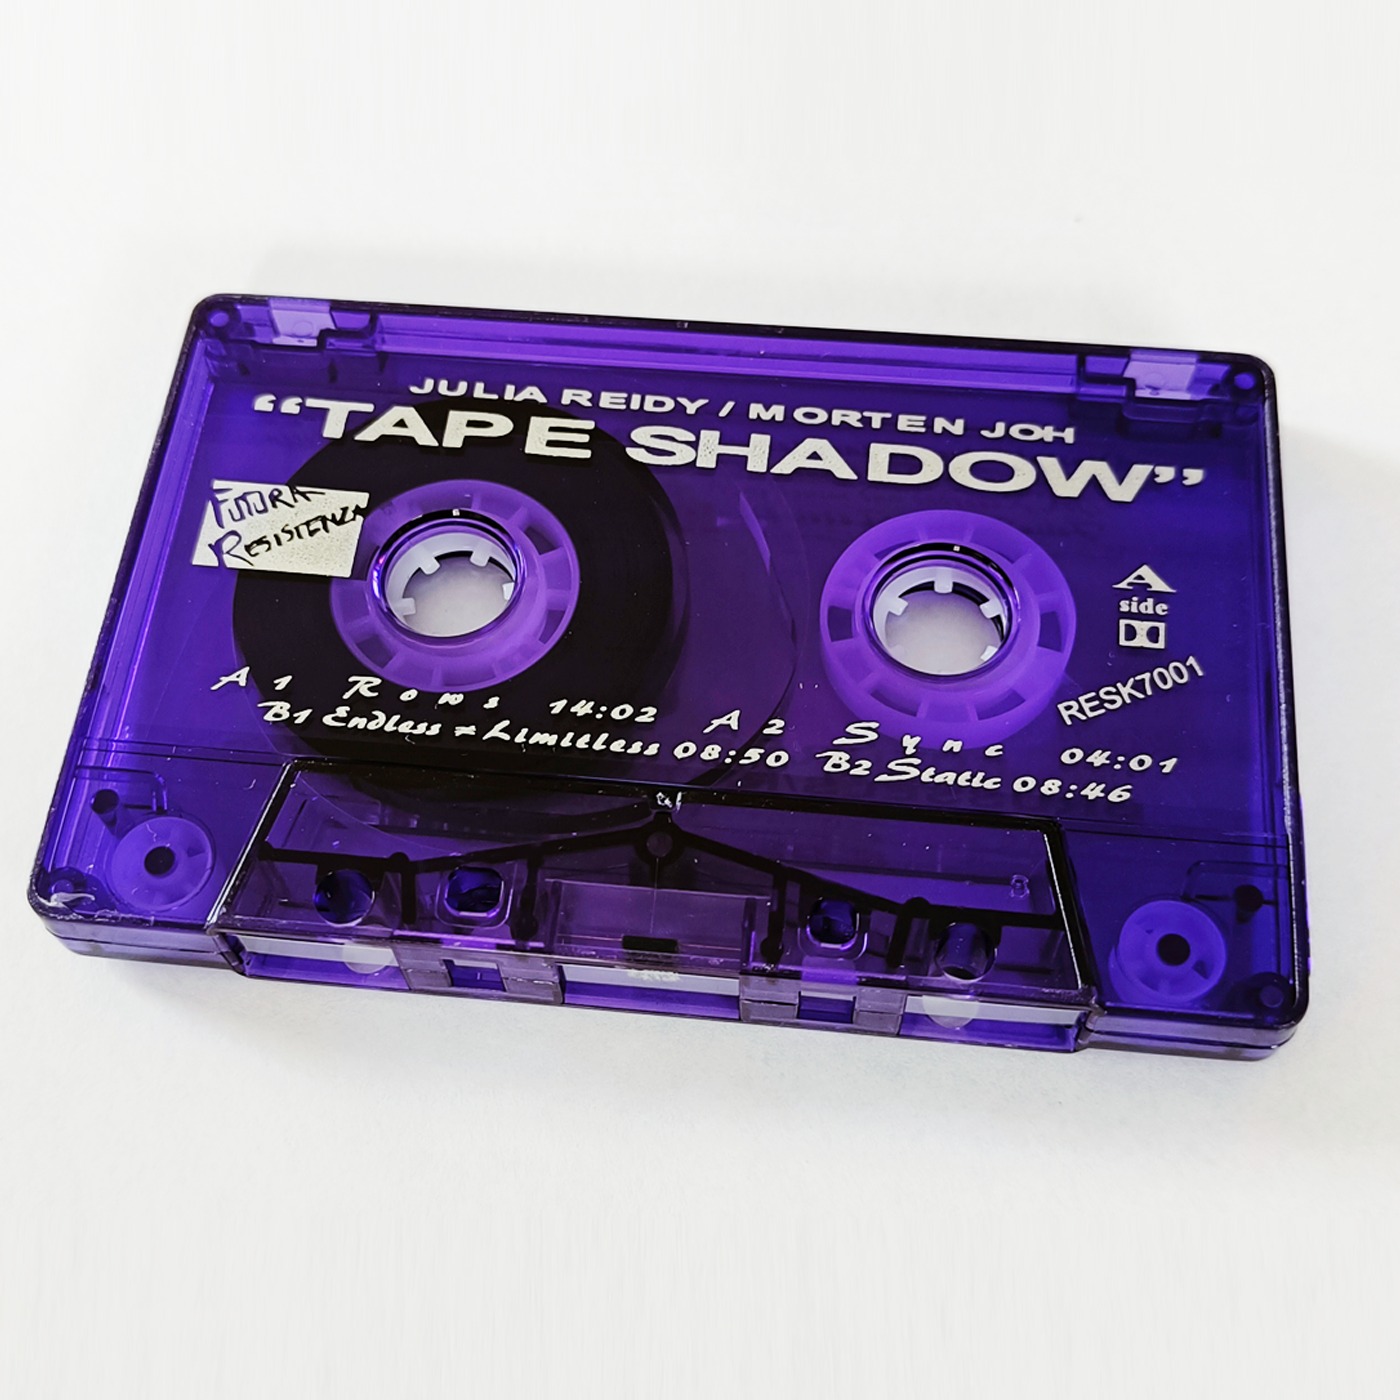 Julia Reidy Morten Shadow Tape uabab | | Joh